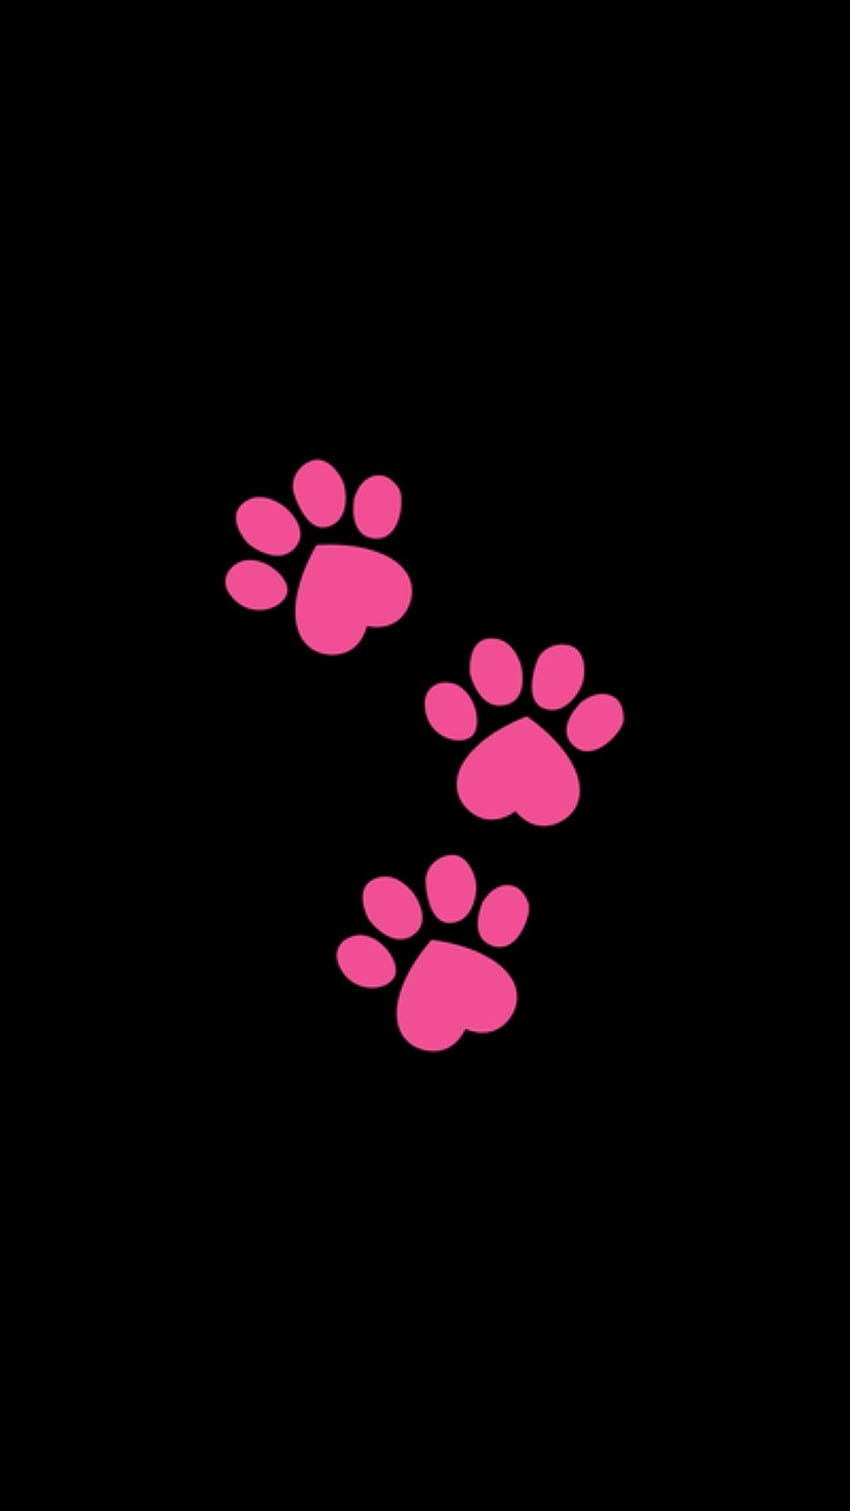 Download Cat Paw Background RoyaltyFree Stock Illustration Image  Pixabay